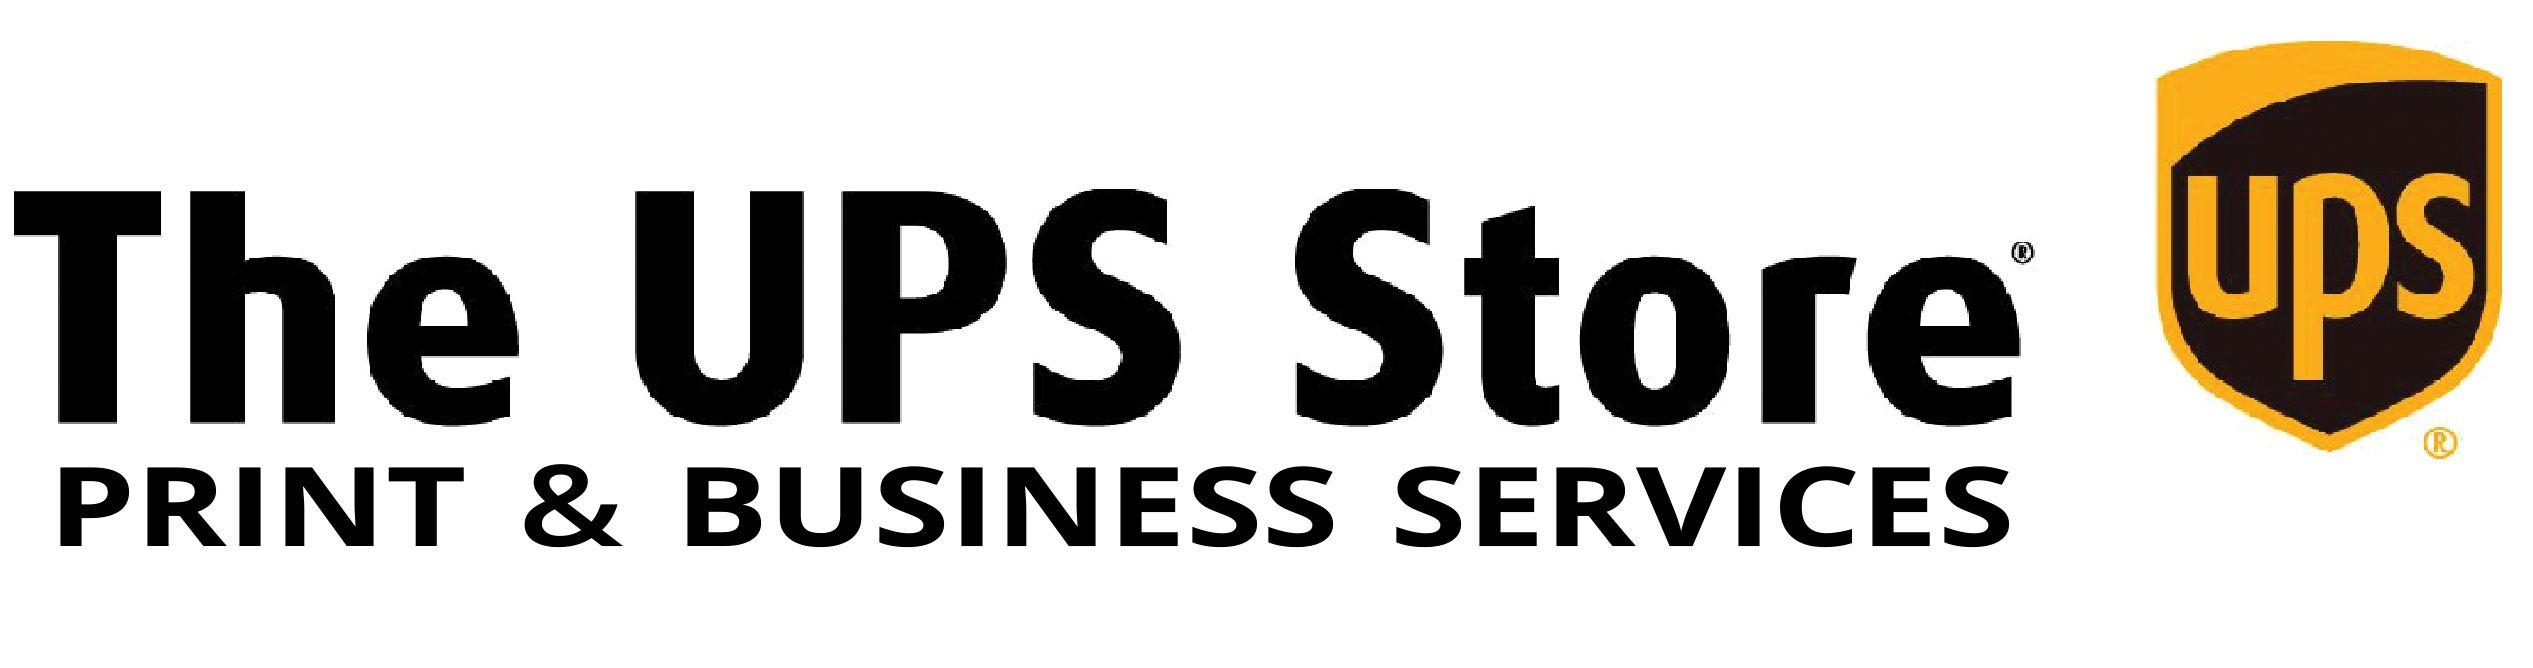 UPS Store Logo - The UPS Store | Logopedia | FANDOM powered by Wikia